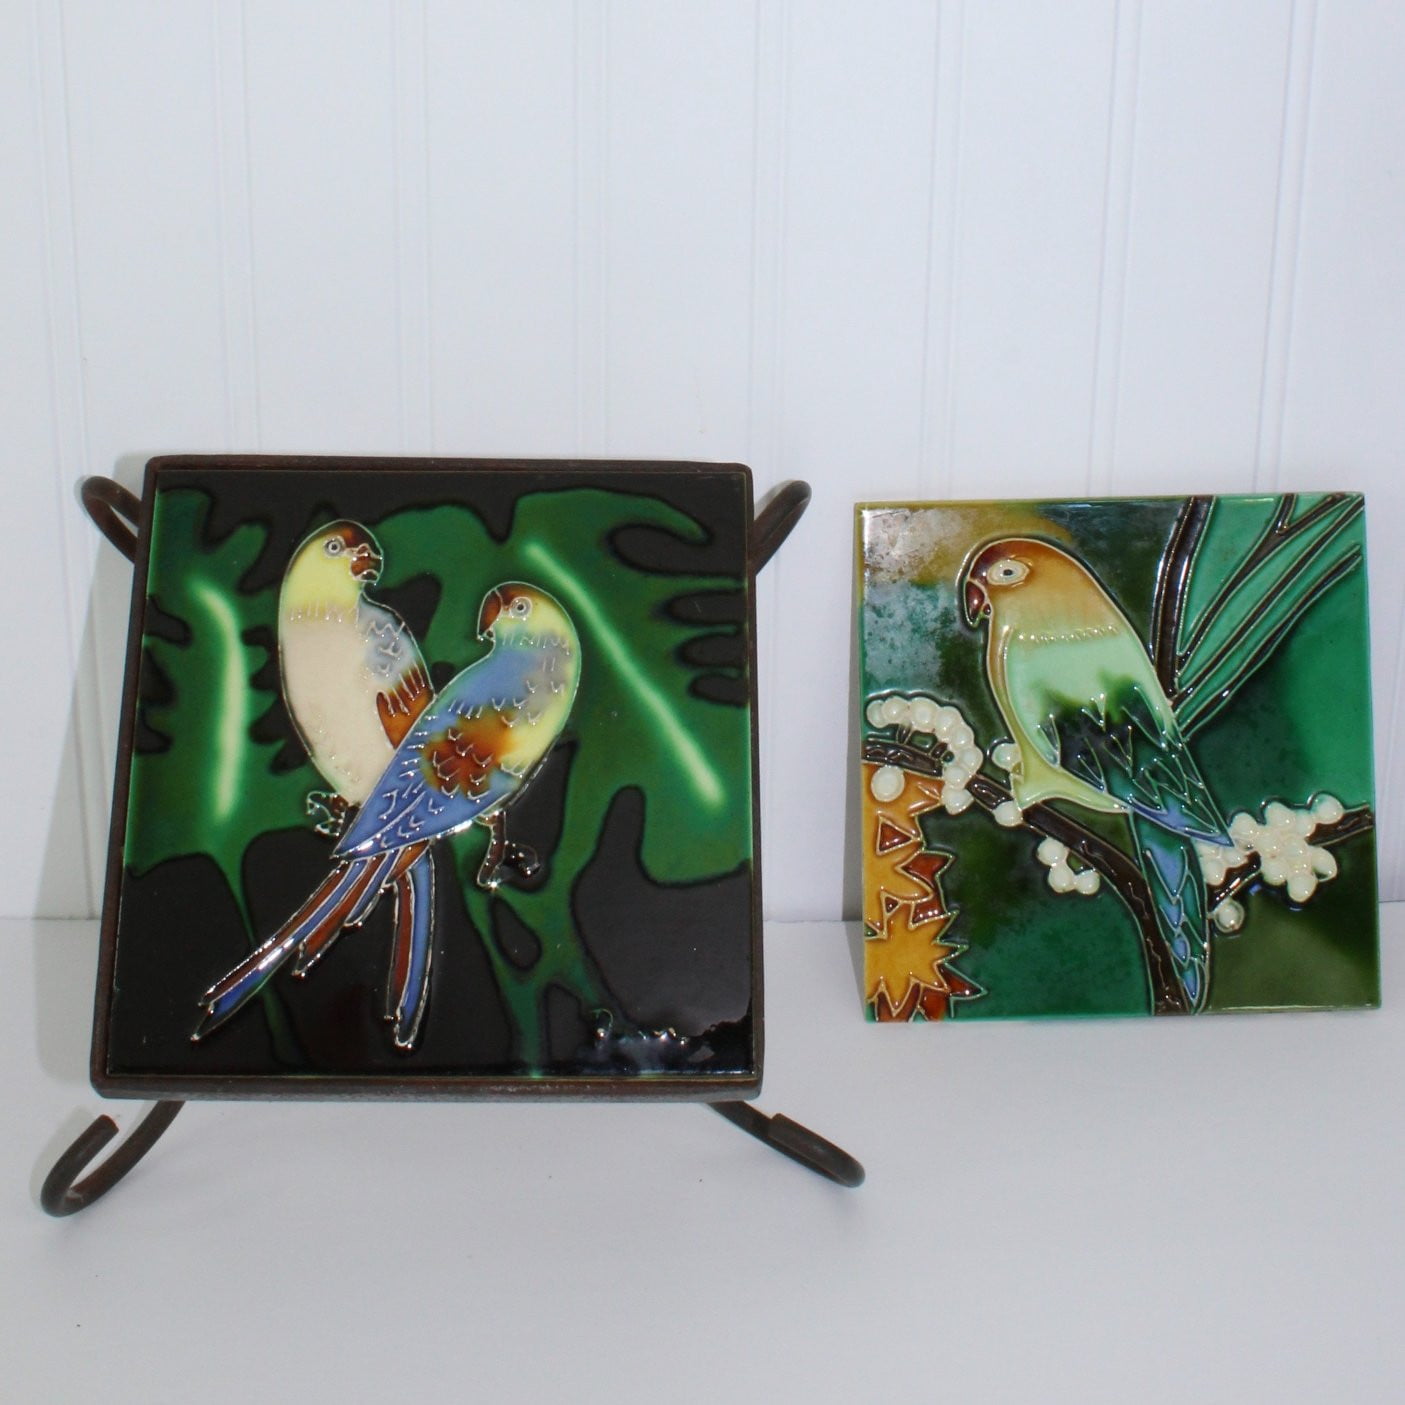 Pair Ceramic Tiles Tropical  Birds Iron Trivet and Single Tile - Colorful Bright